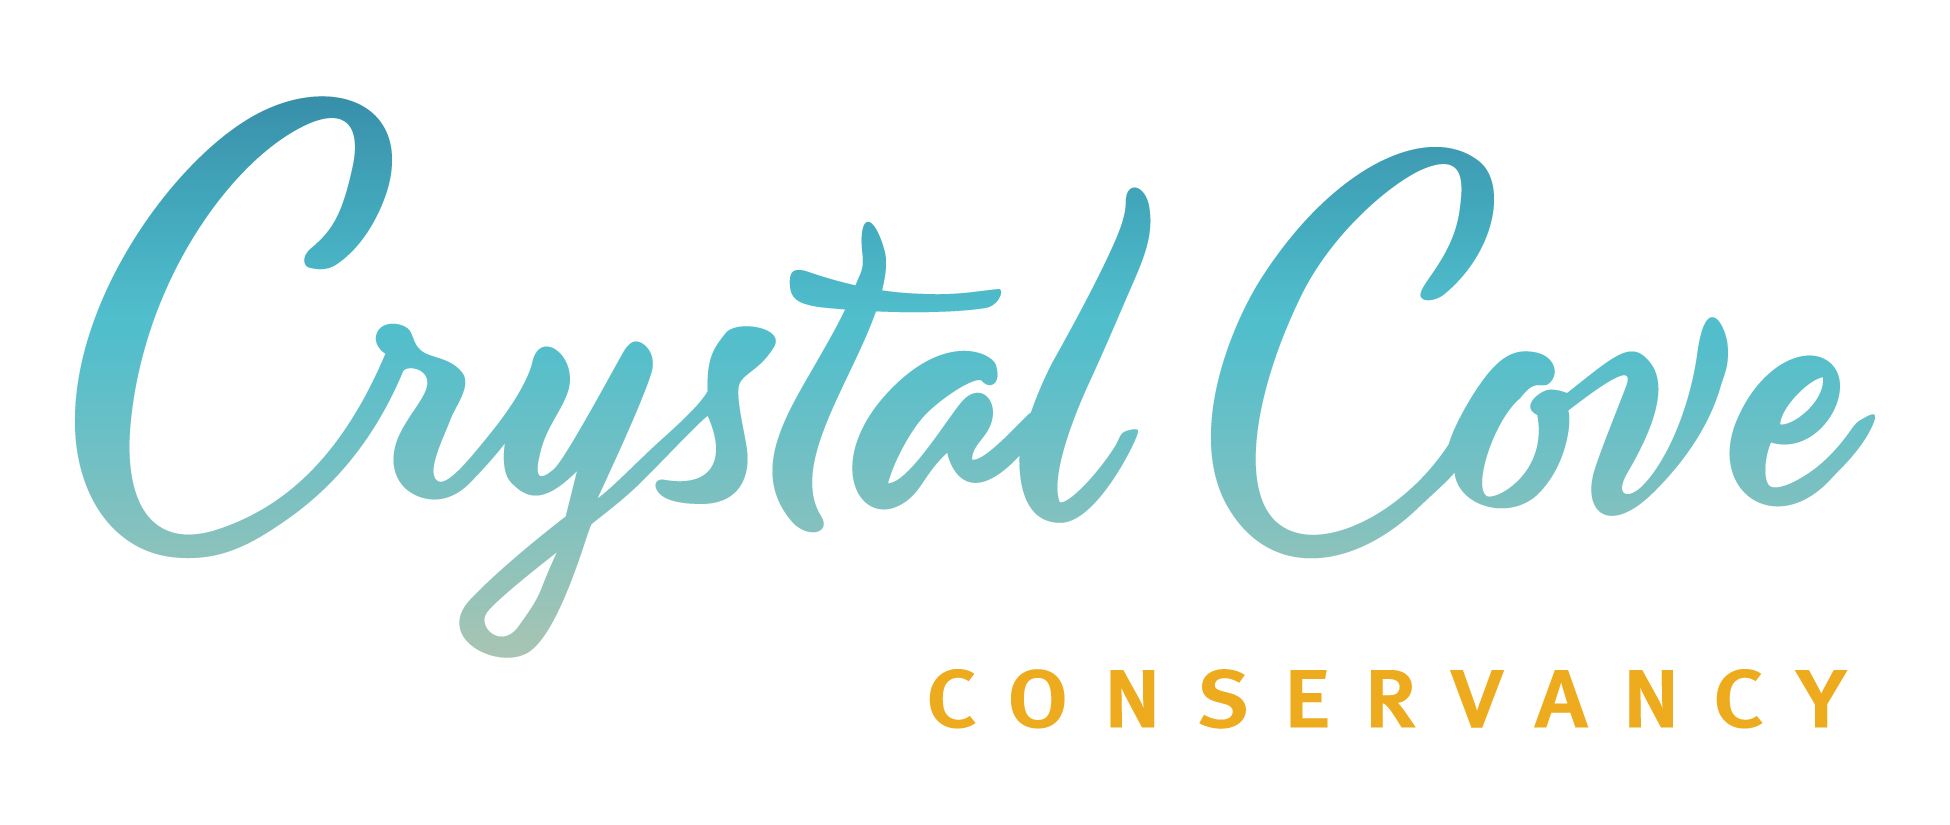 CrystalCoveAlliance Logo